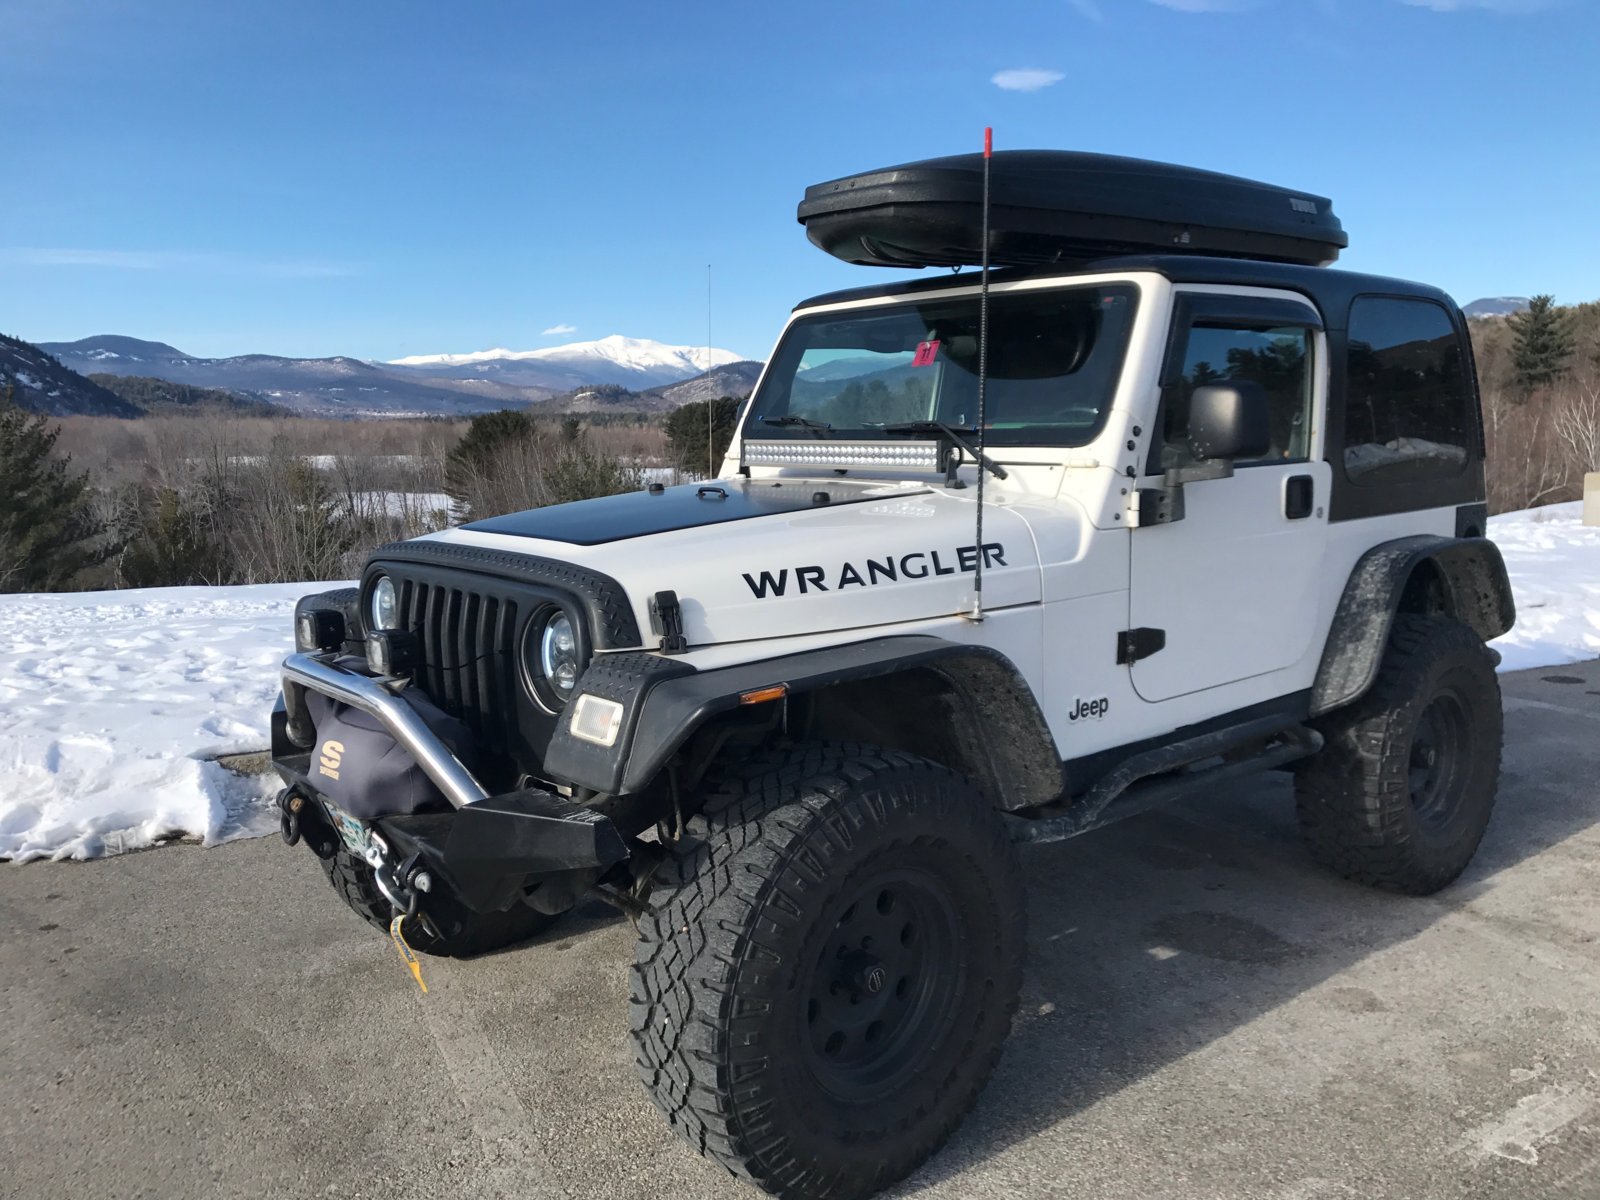 Feed back on the Wrangler hood sticker | Jeep Wrangler TJ Forum